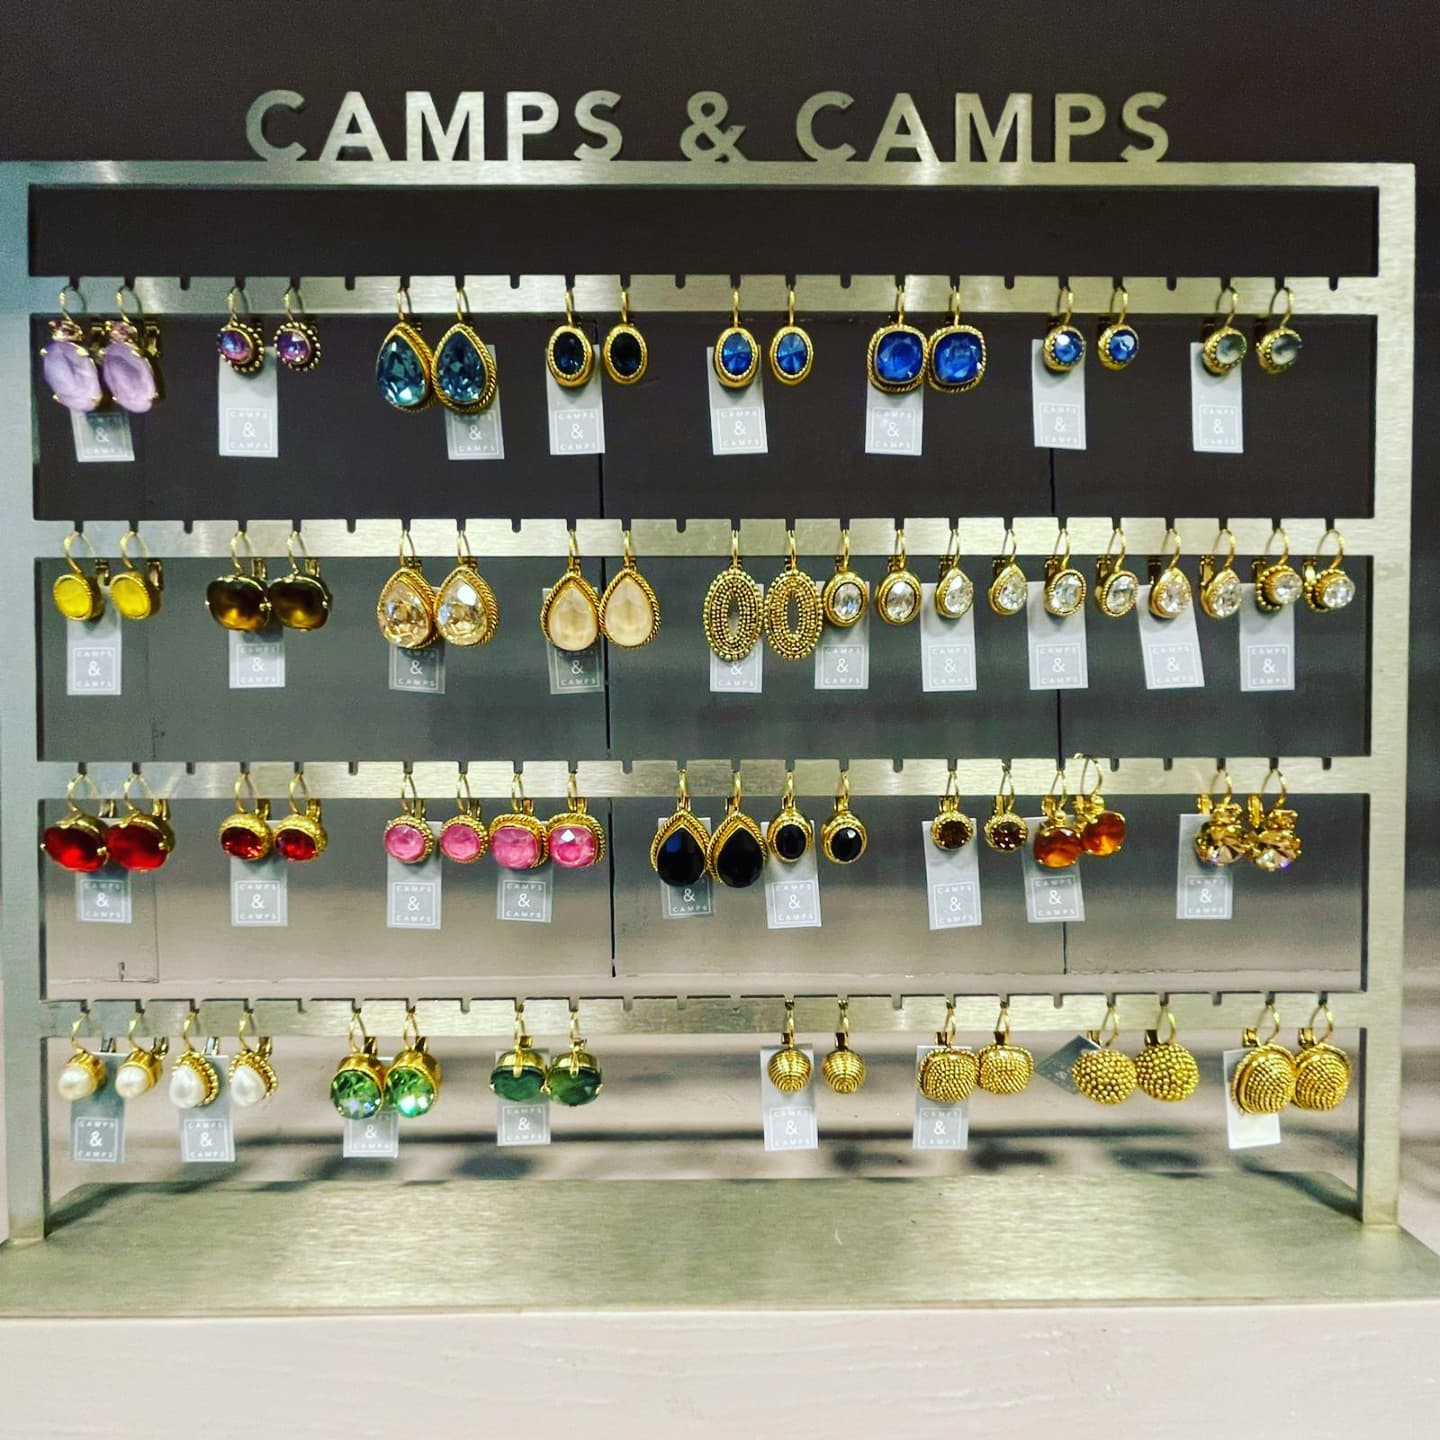 #camps&camps#earrings #christmas #cristmaspresent #shoplocal #app 0612971720 #voorubestelling♡♡♡🎁🎁🎁